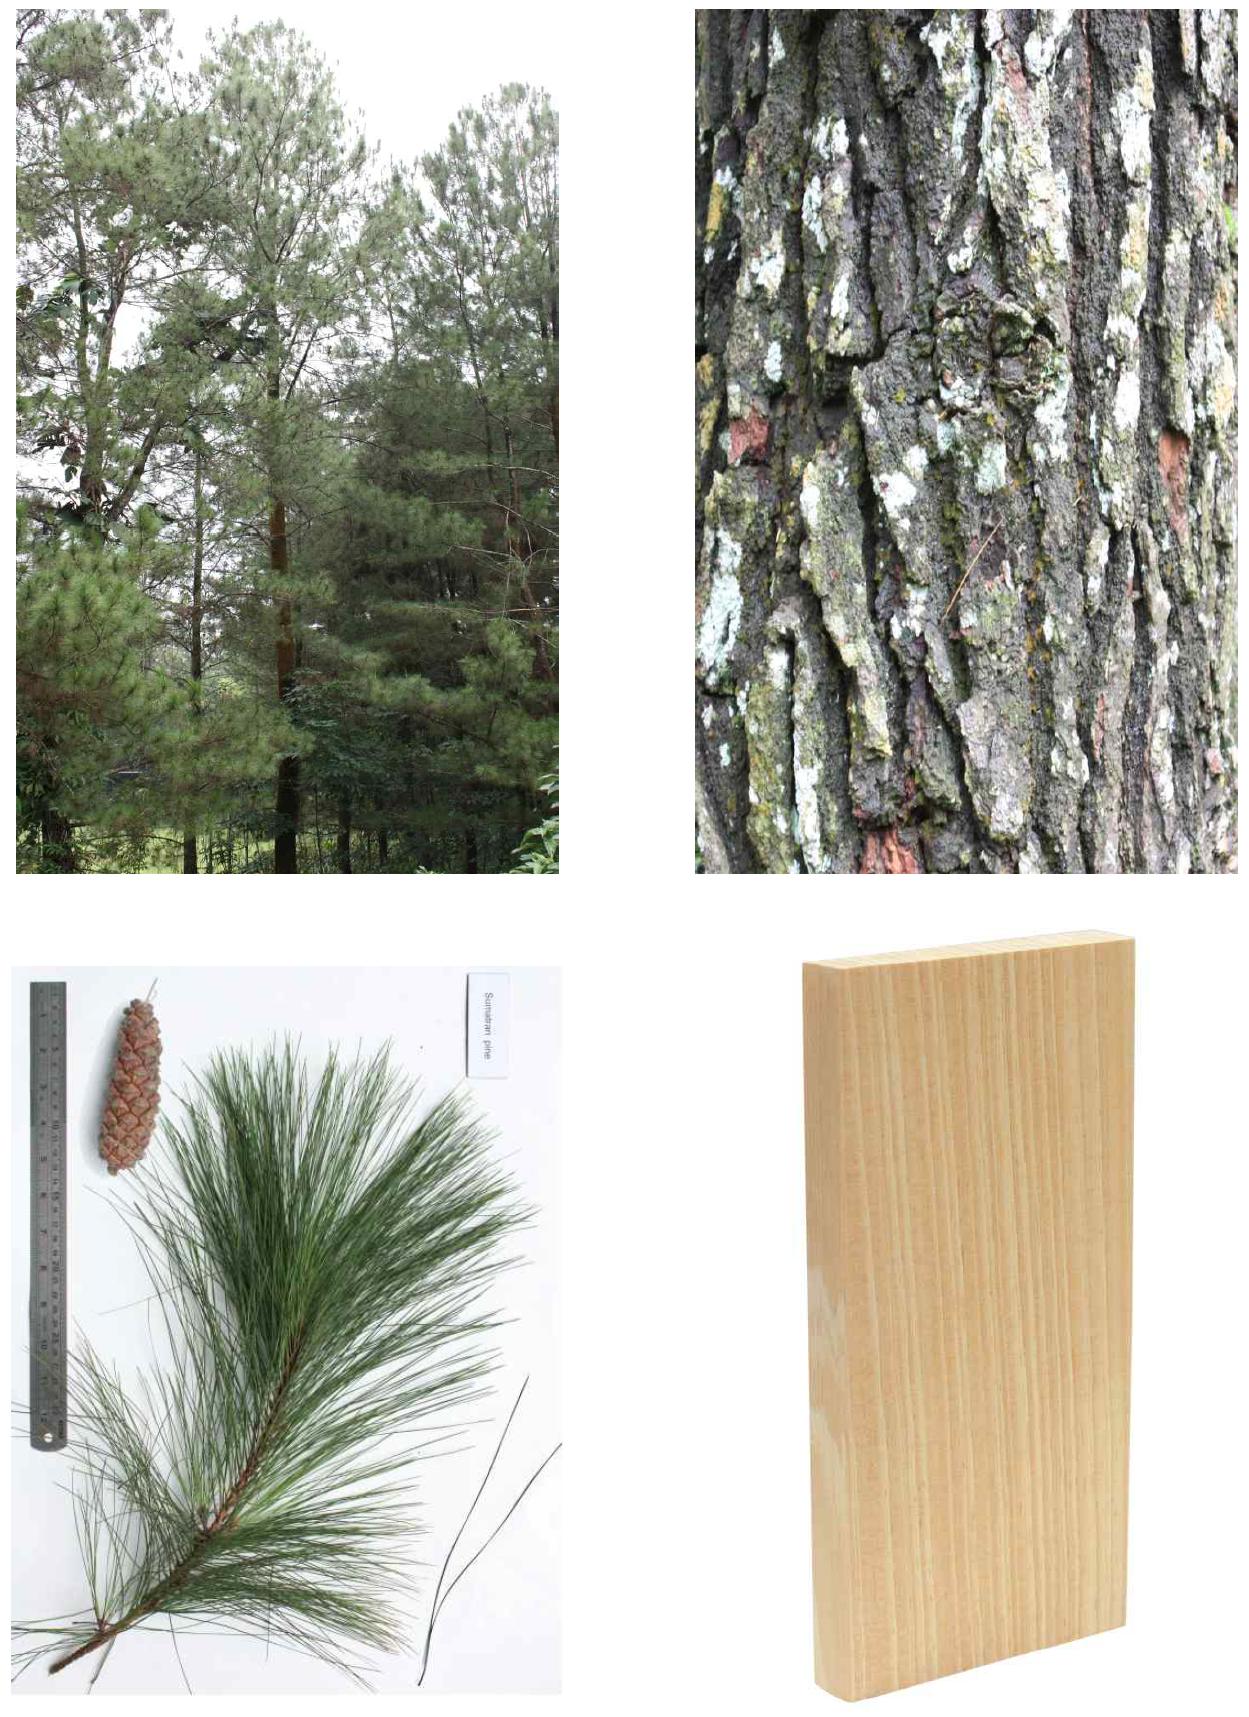 Sumatran pine의 전체수형, 수피, 잎 및 재면.